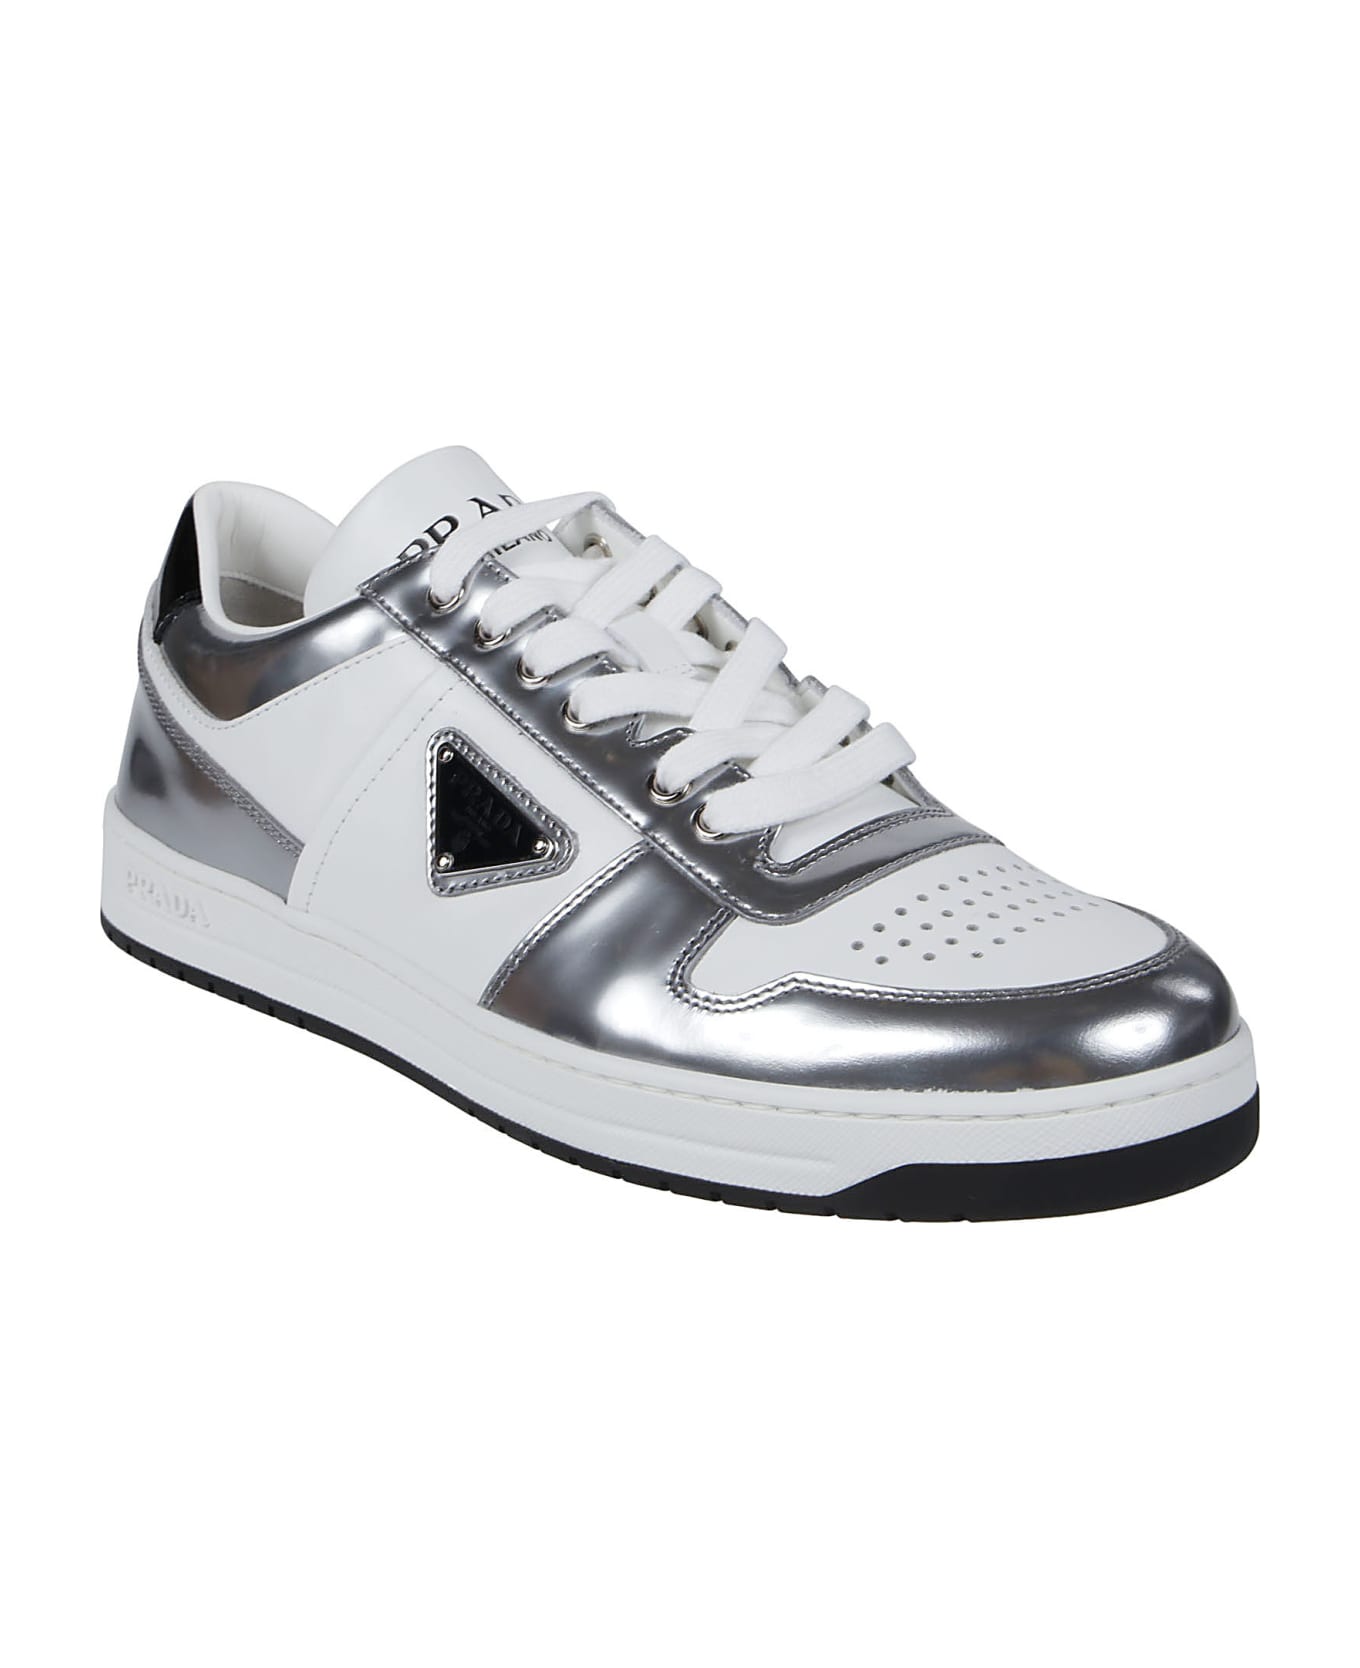 Prada Sneakers Downtown - Bianco/argento